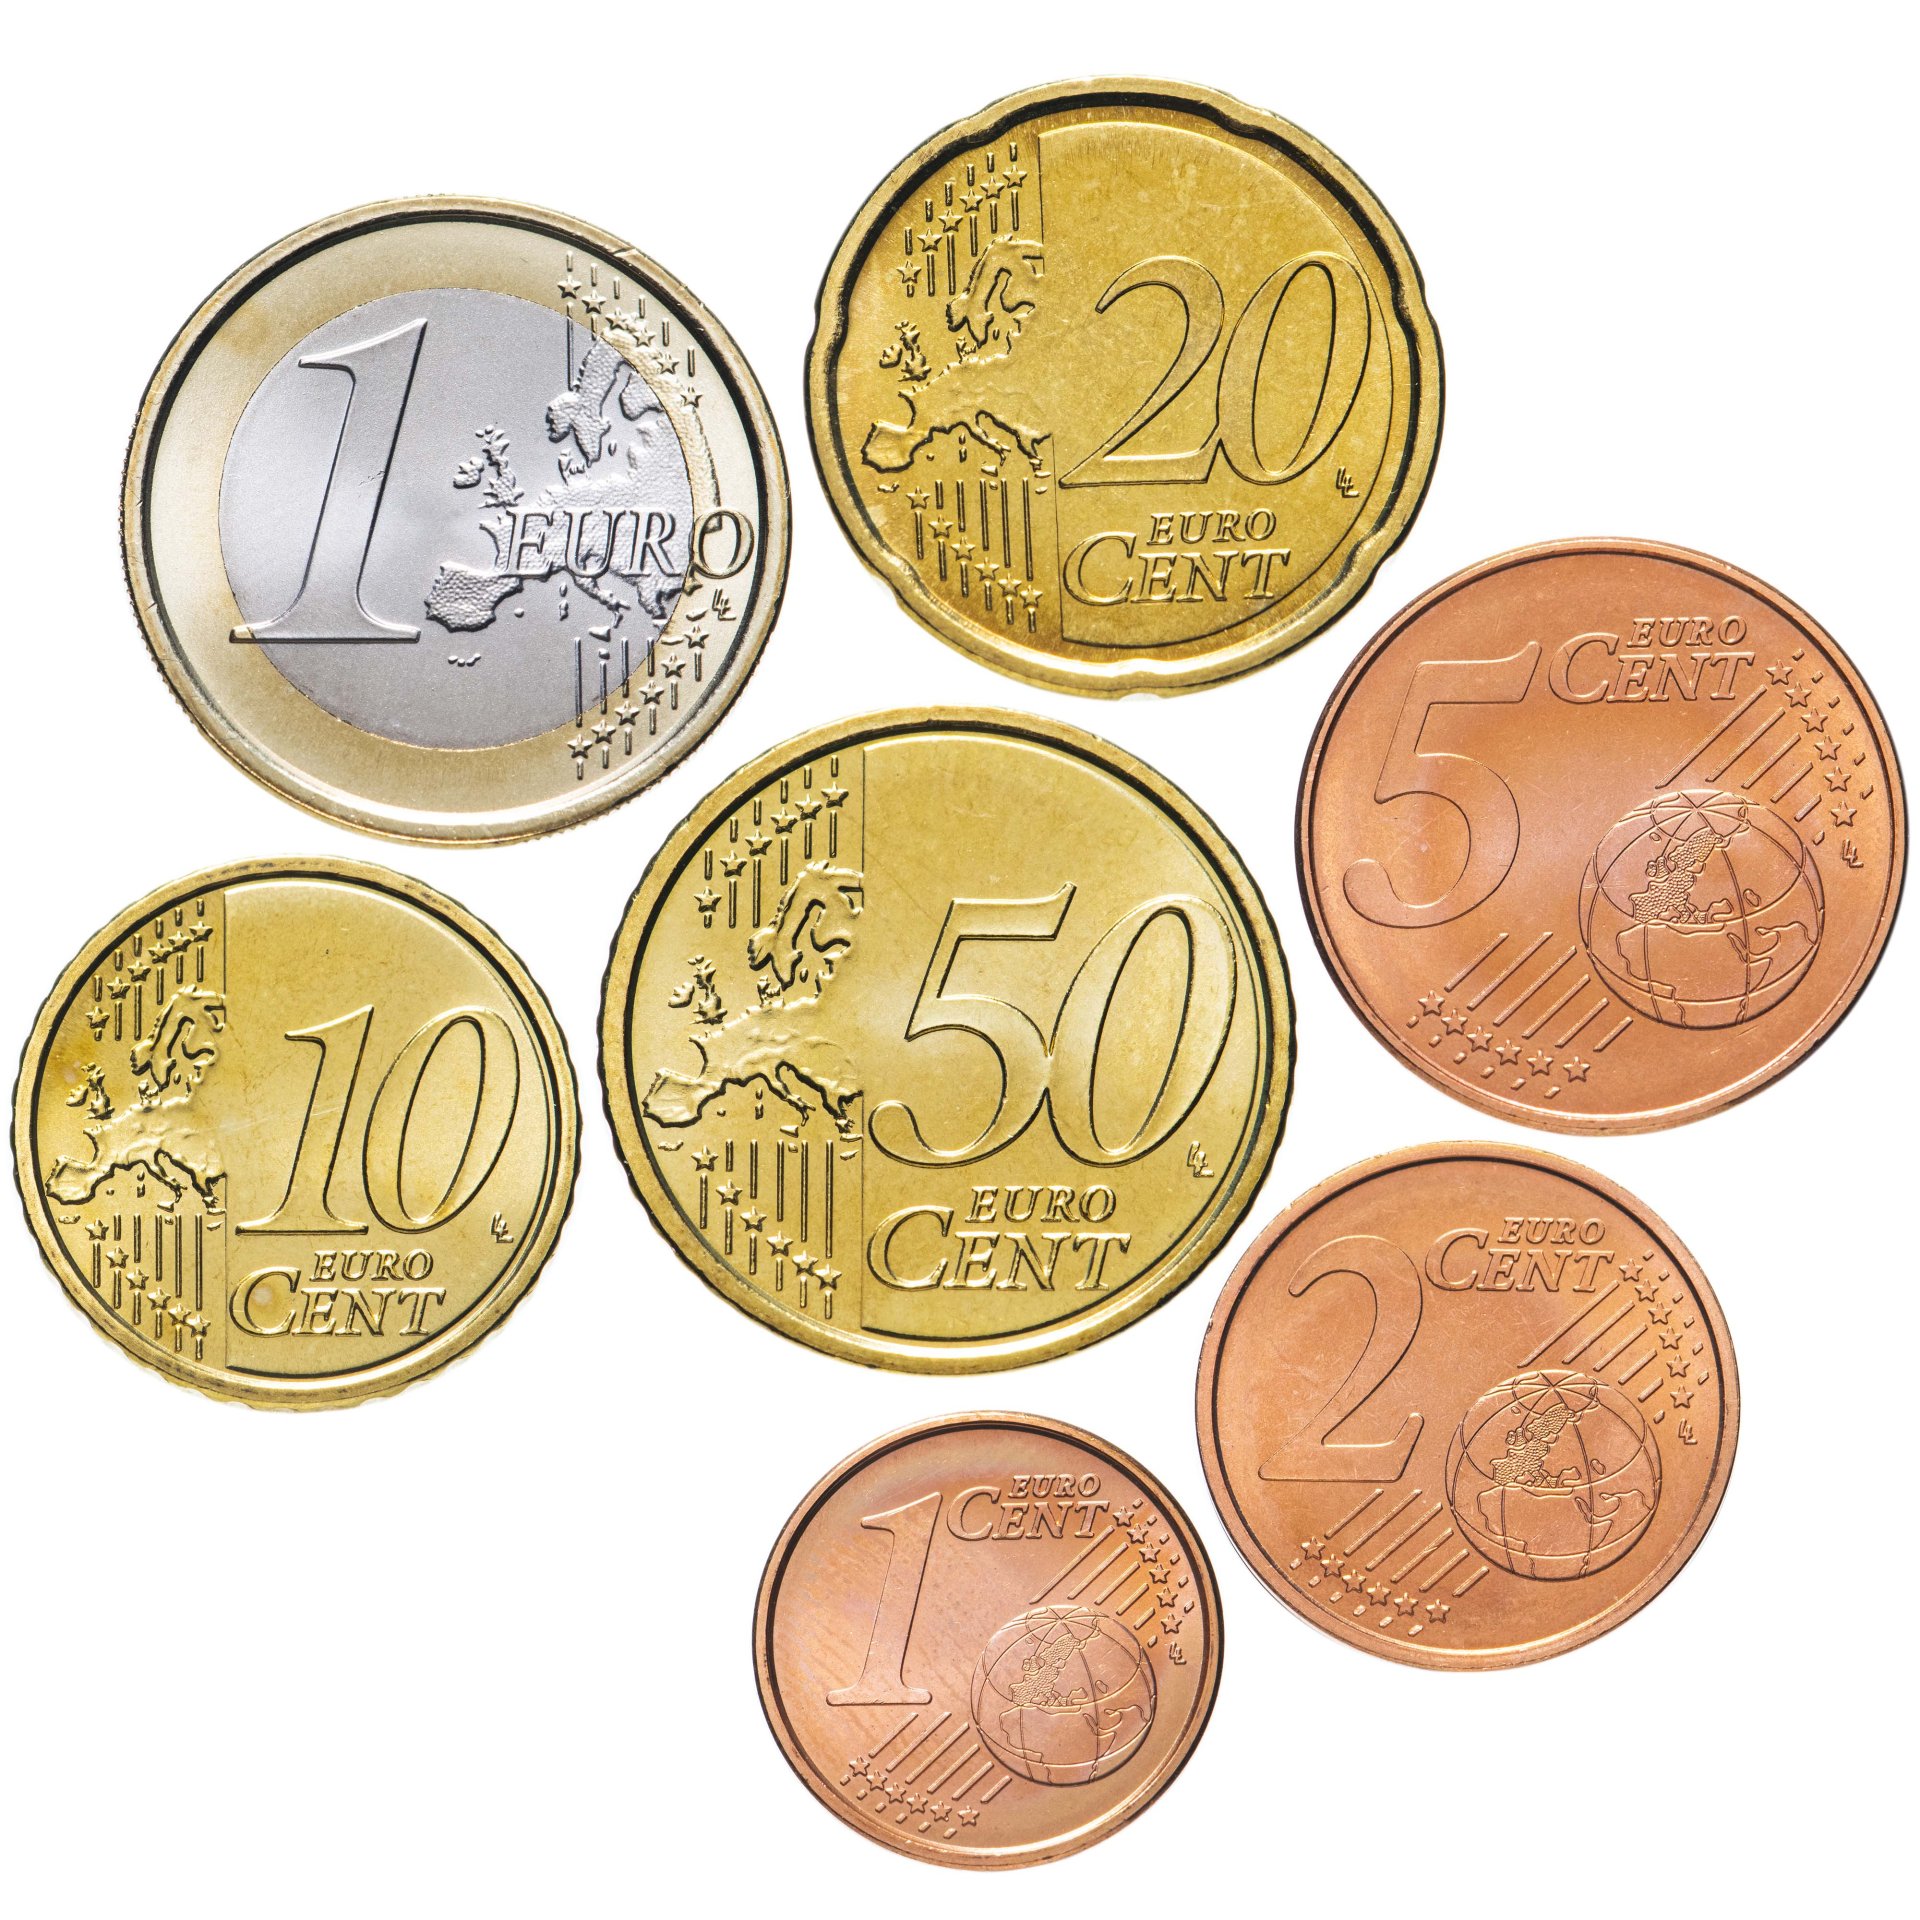 1 5 евро в рубли. Euro Cent Kinris 2018 монета. 1 Евро монета. 20 Cent Euro в рублях. Набор монет евро Ватикан.